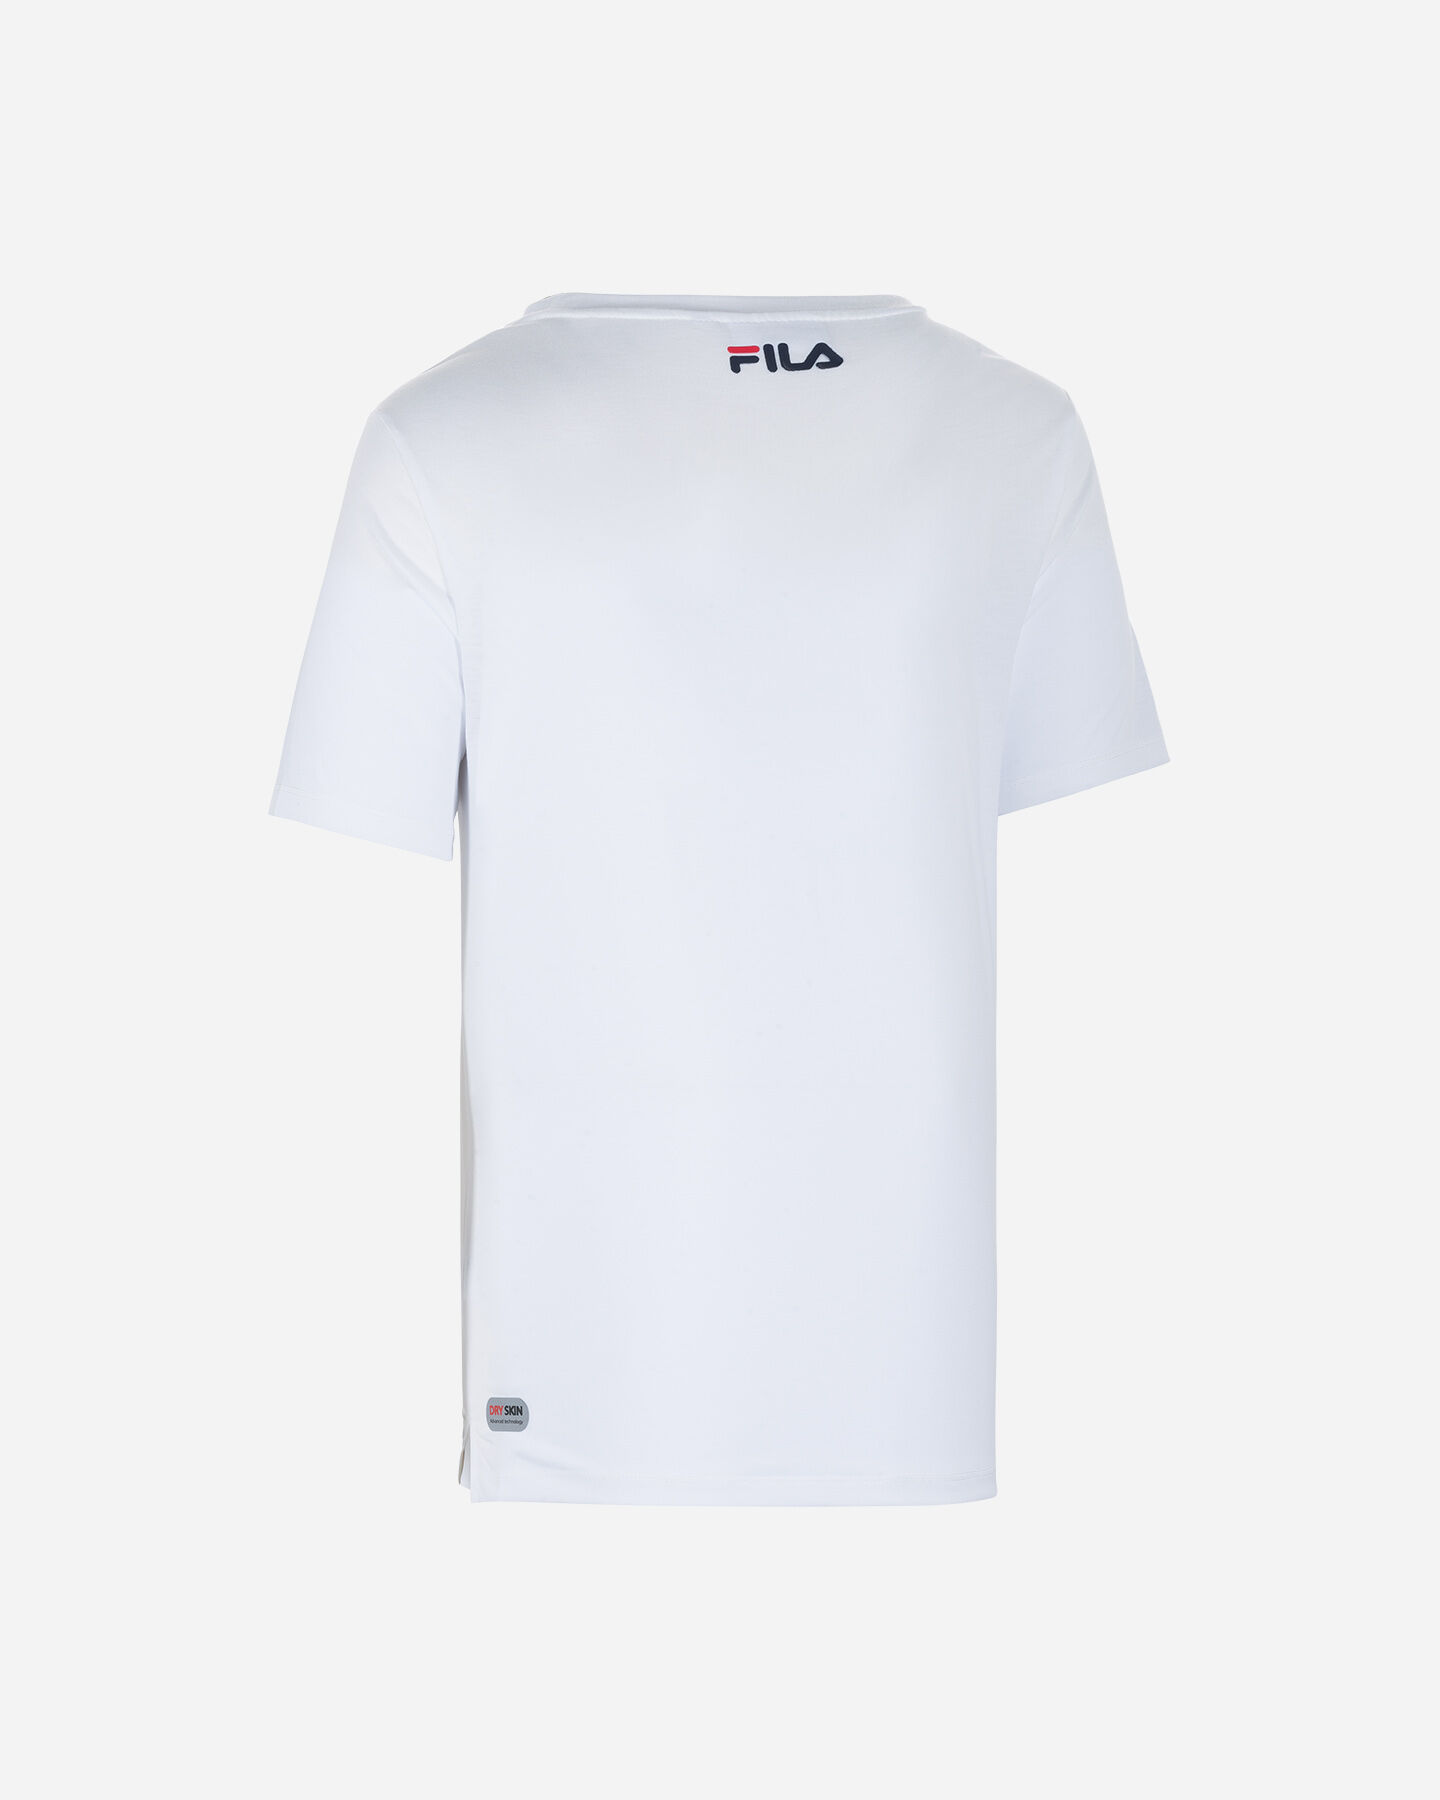  T-Shirt tennis FILA TENNIS BIG LOGO M S4075792 scatto 1